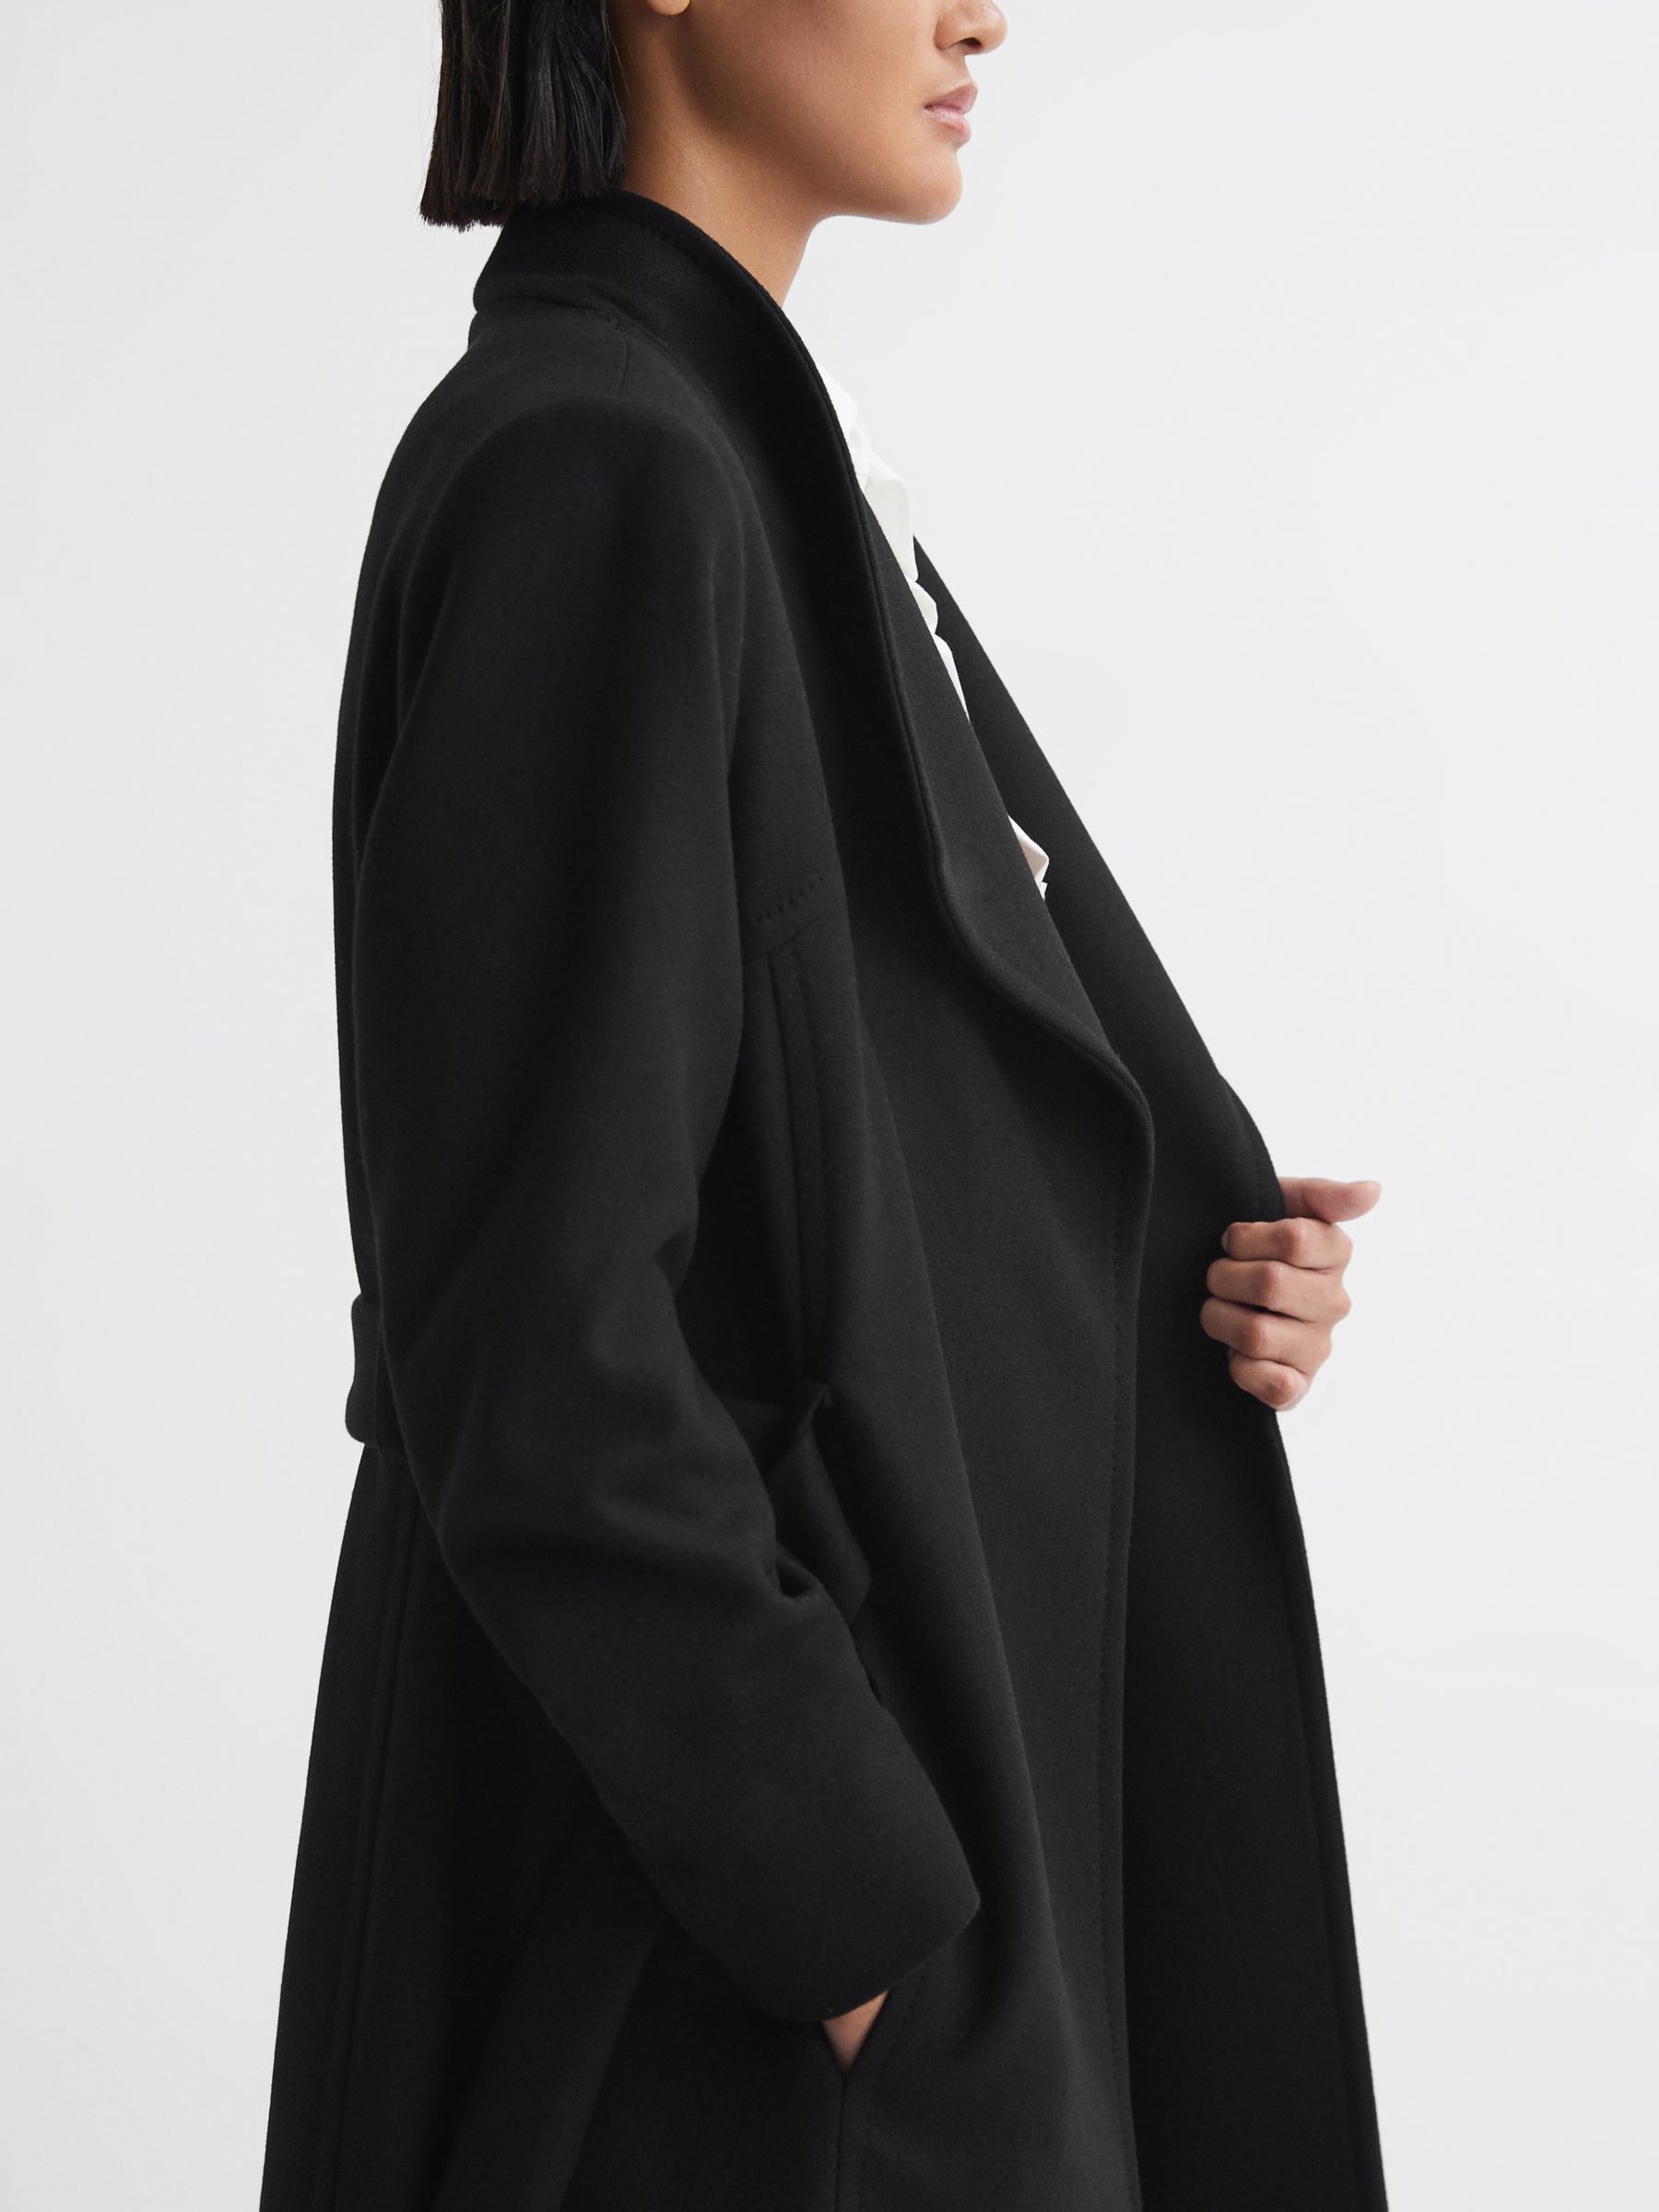 Reiss Freja Tailored Wool Blend Coat, Black at John Lewis & Partners